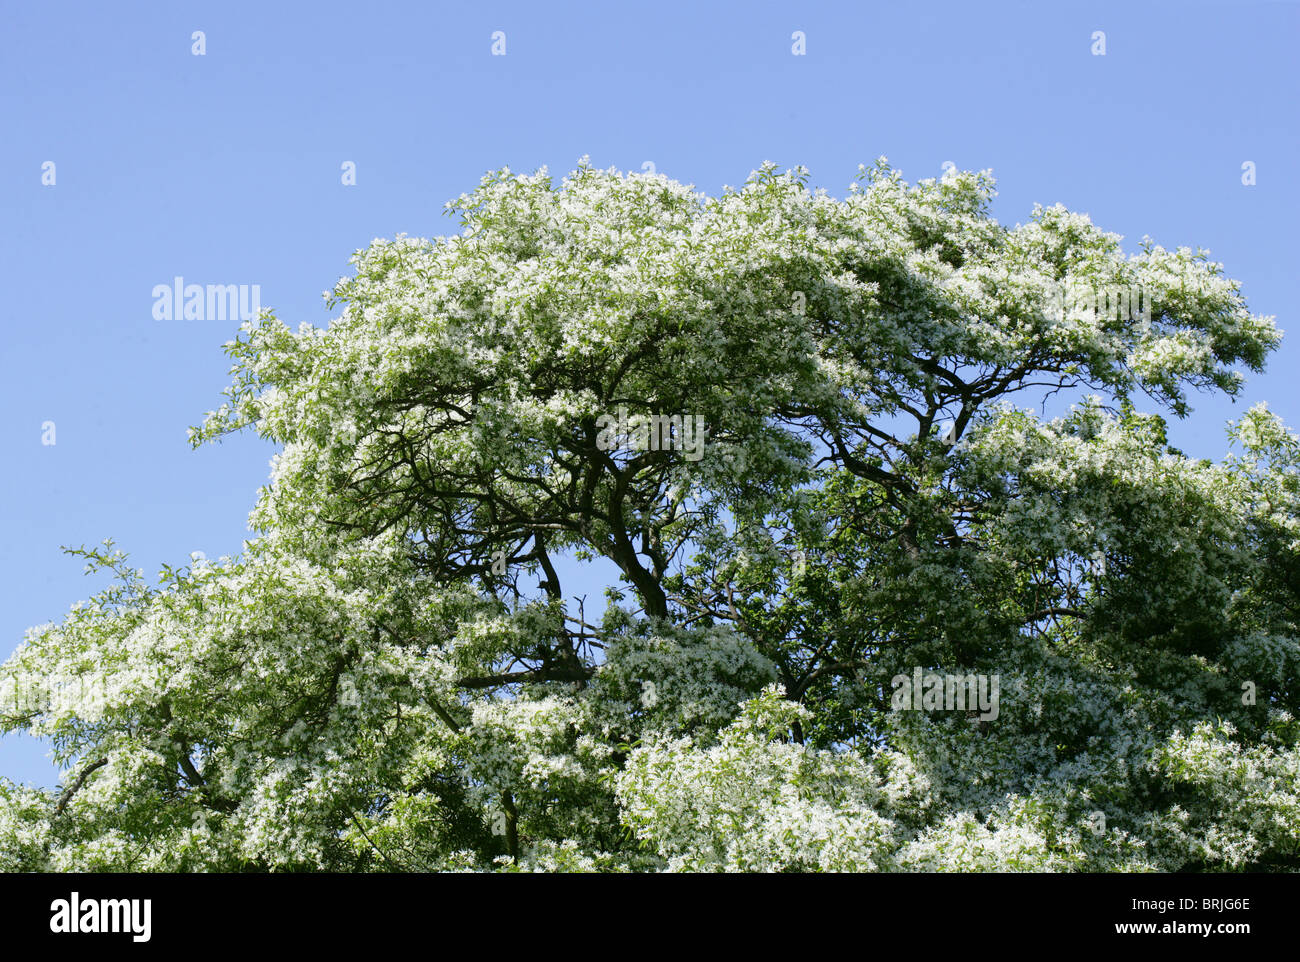 Fringe chino chino o árbol Fringetree, Chionanthus retusus, Oleaceae, al suroeste de China. Foto de stock